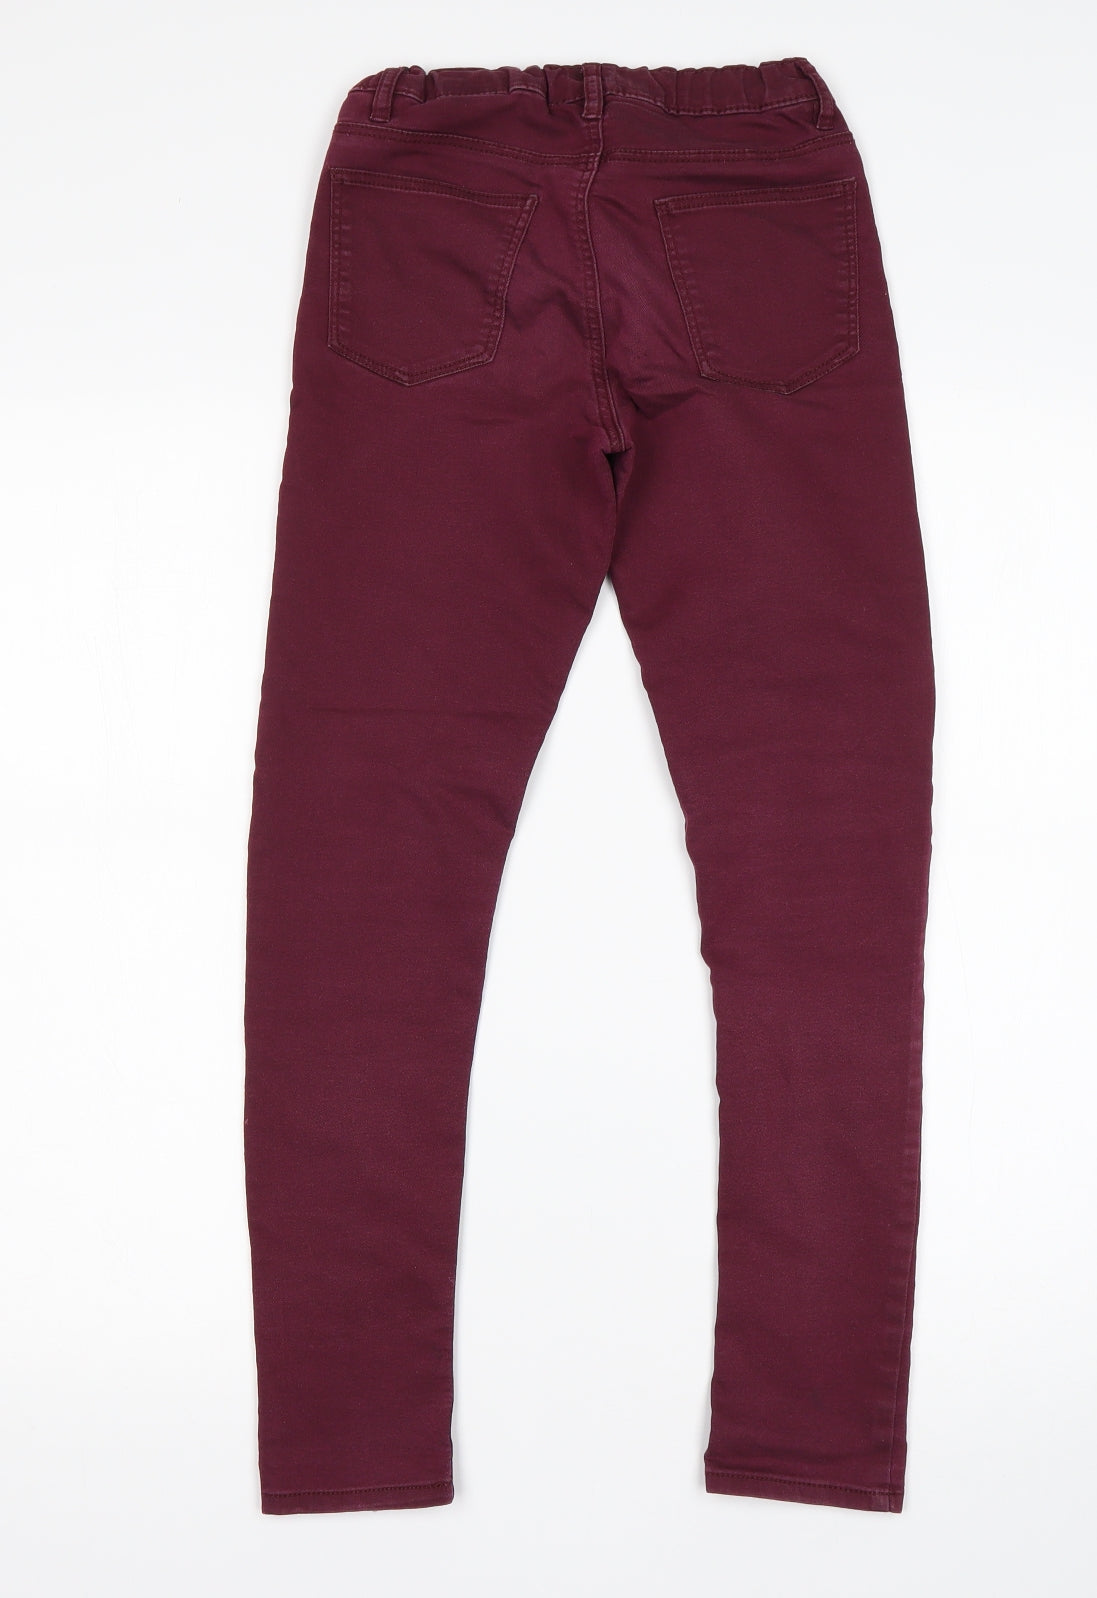 H&M Girls Purple  Cotton Skinny Jeans Size 11 Years  Regular